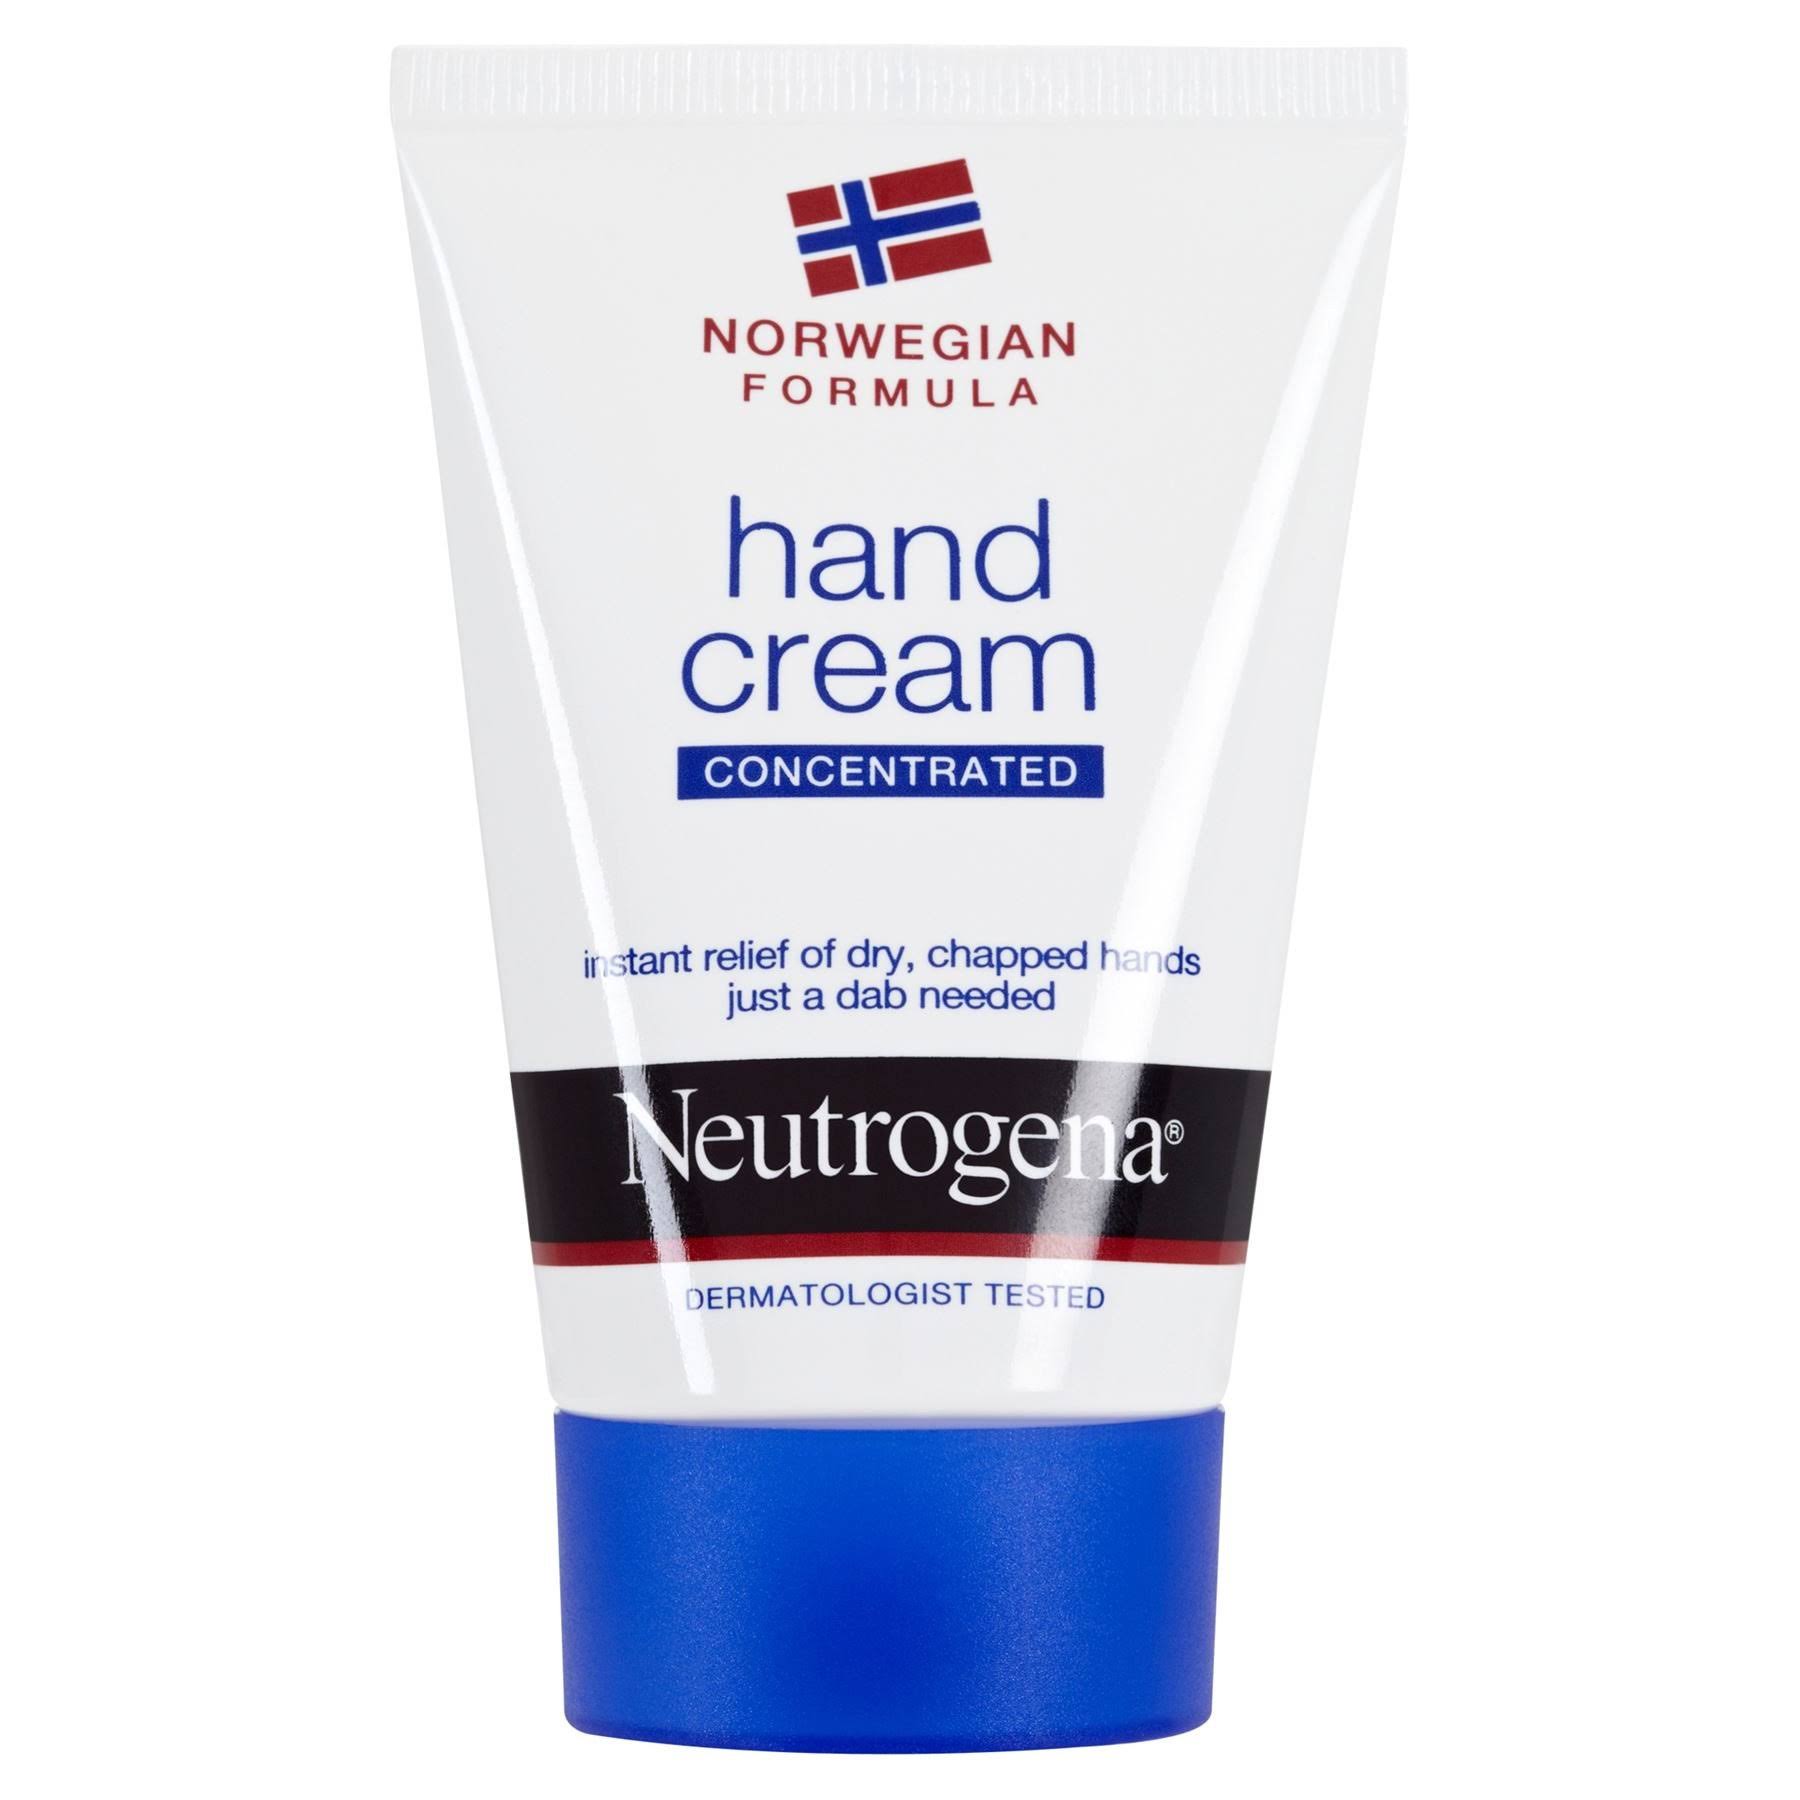 Neutrogena Norwegian Formula Concentrated Scented Hand Cream - 50ml